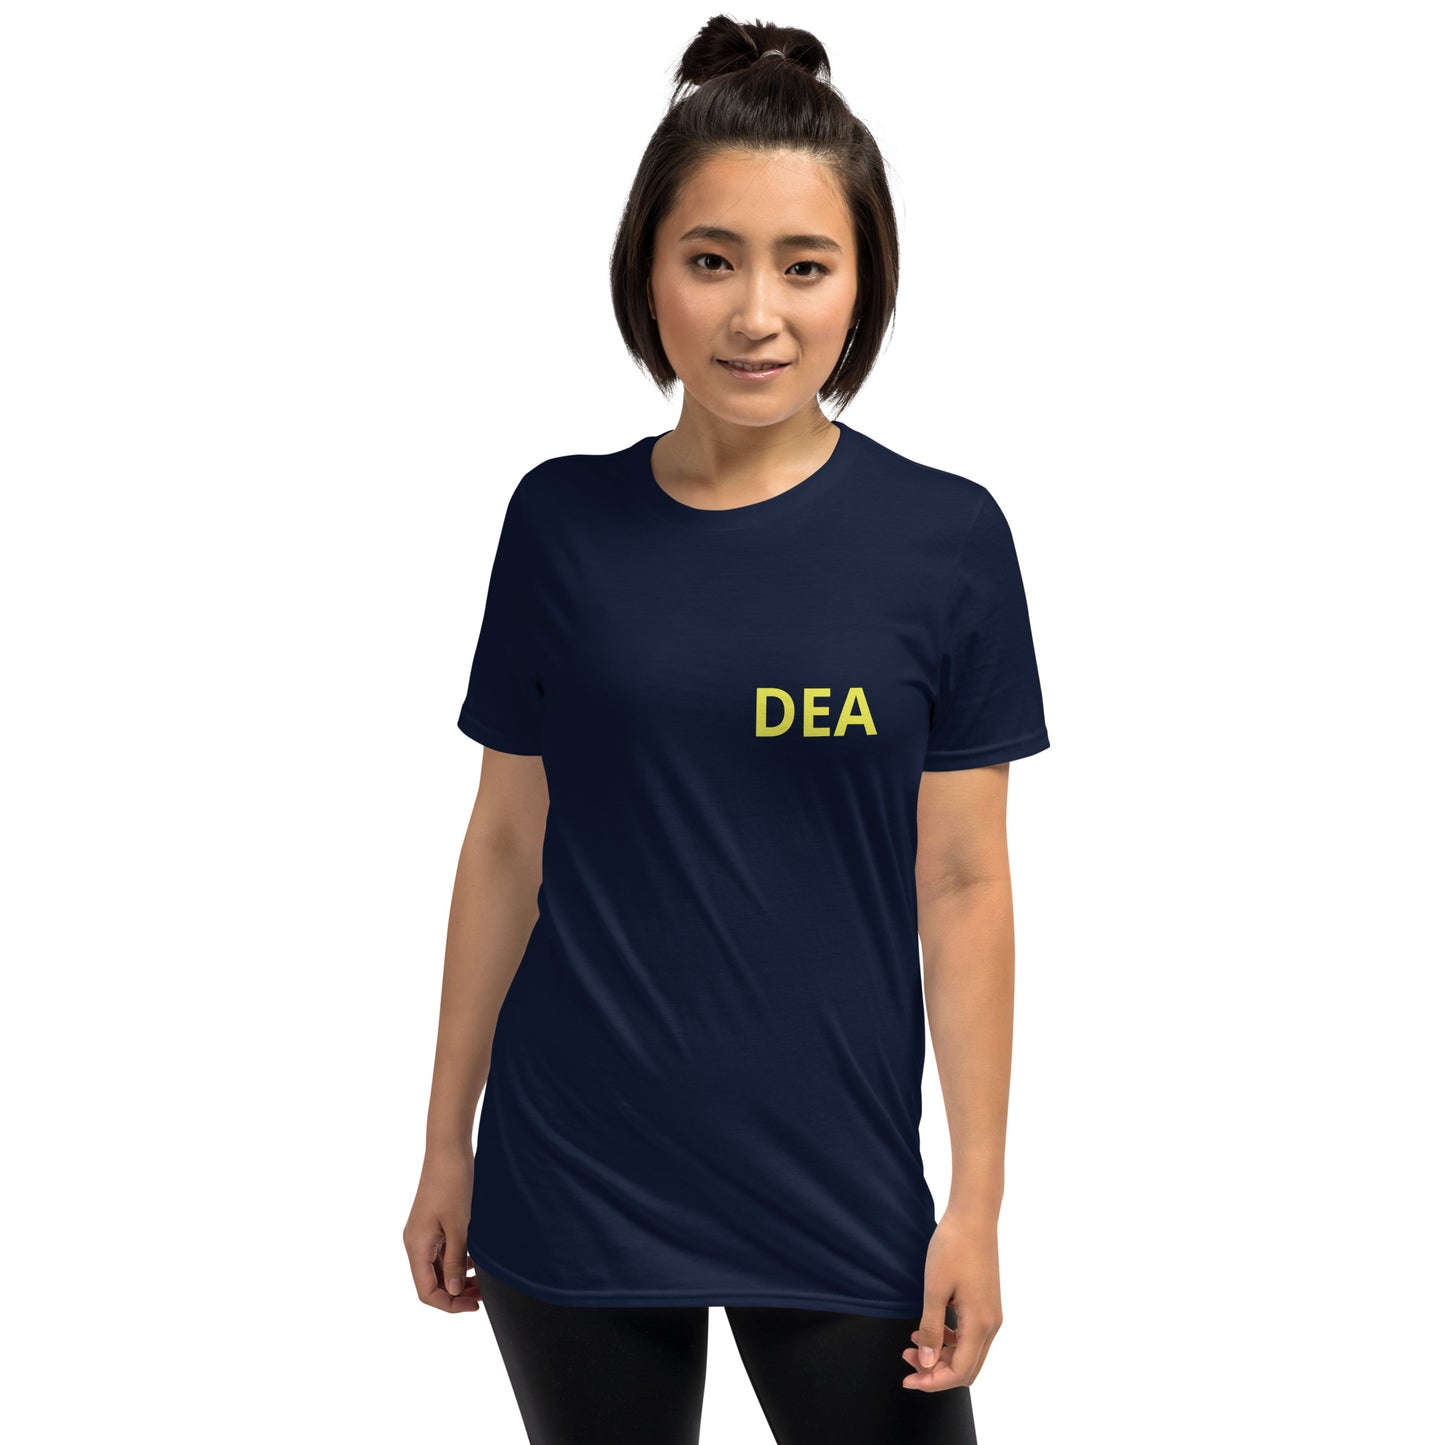 DEA Evidence Fabrication Party Shirt